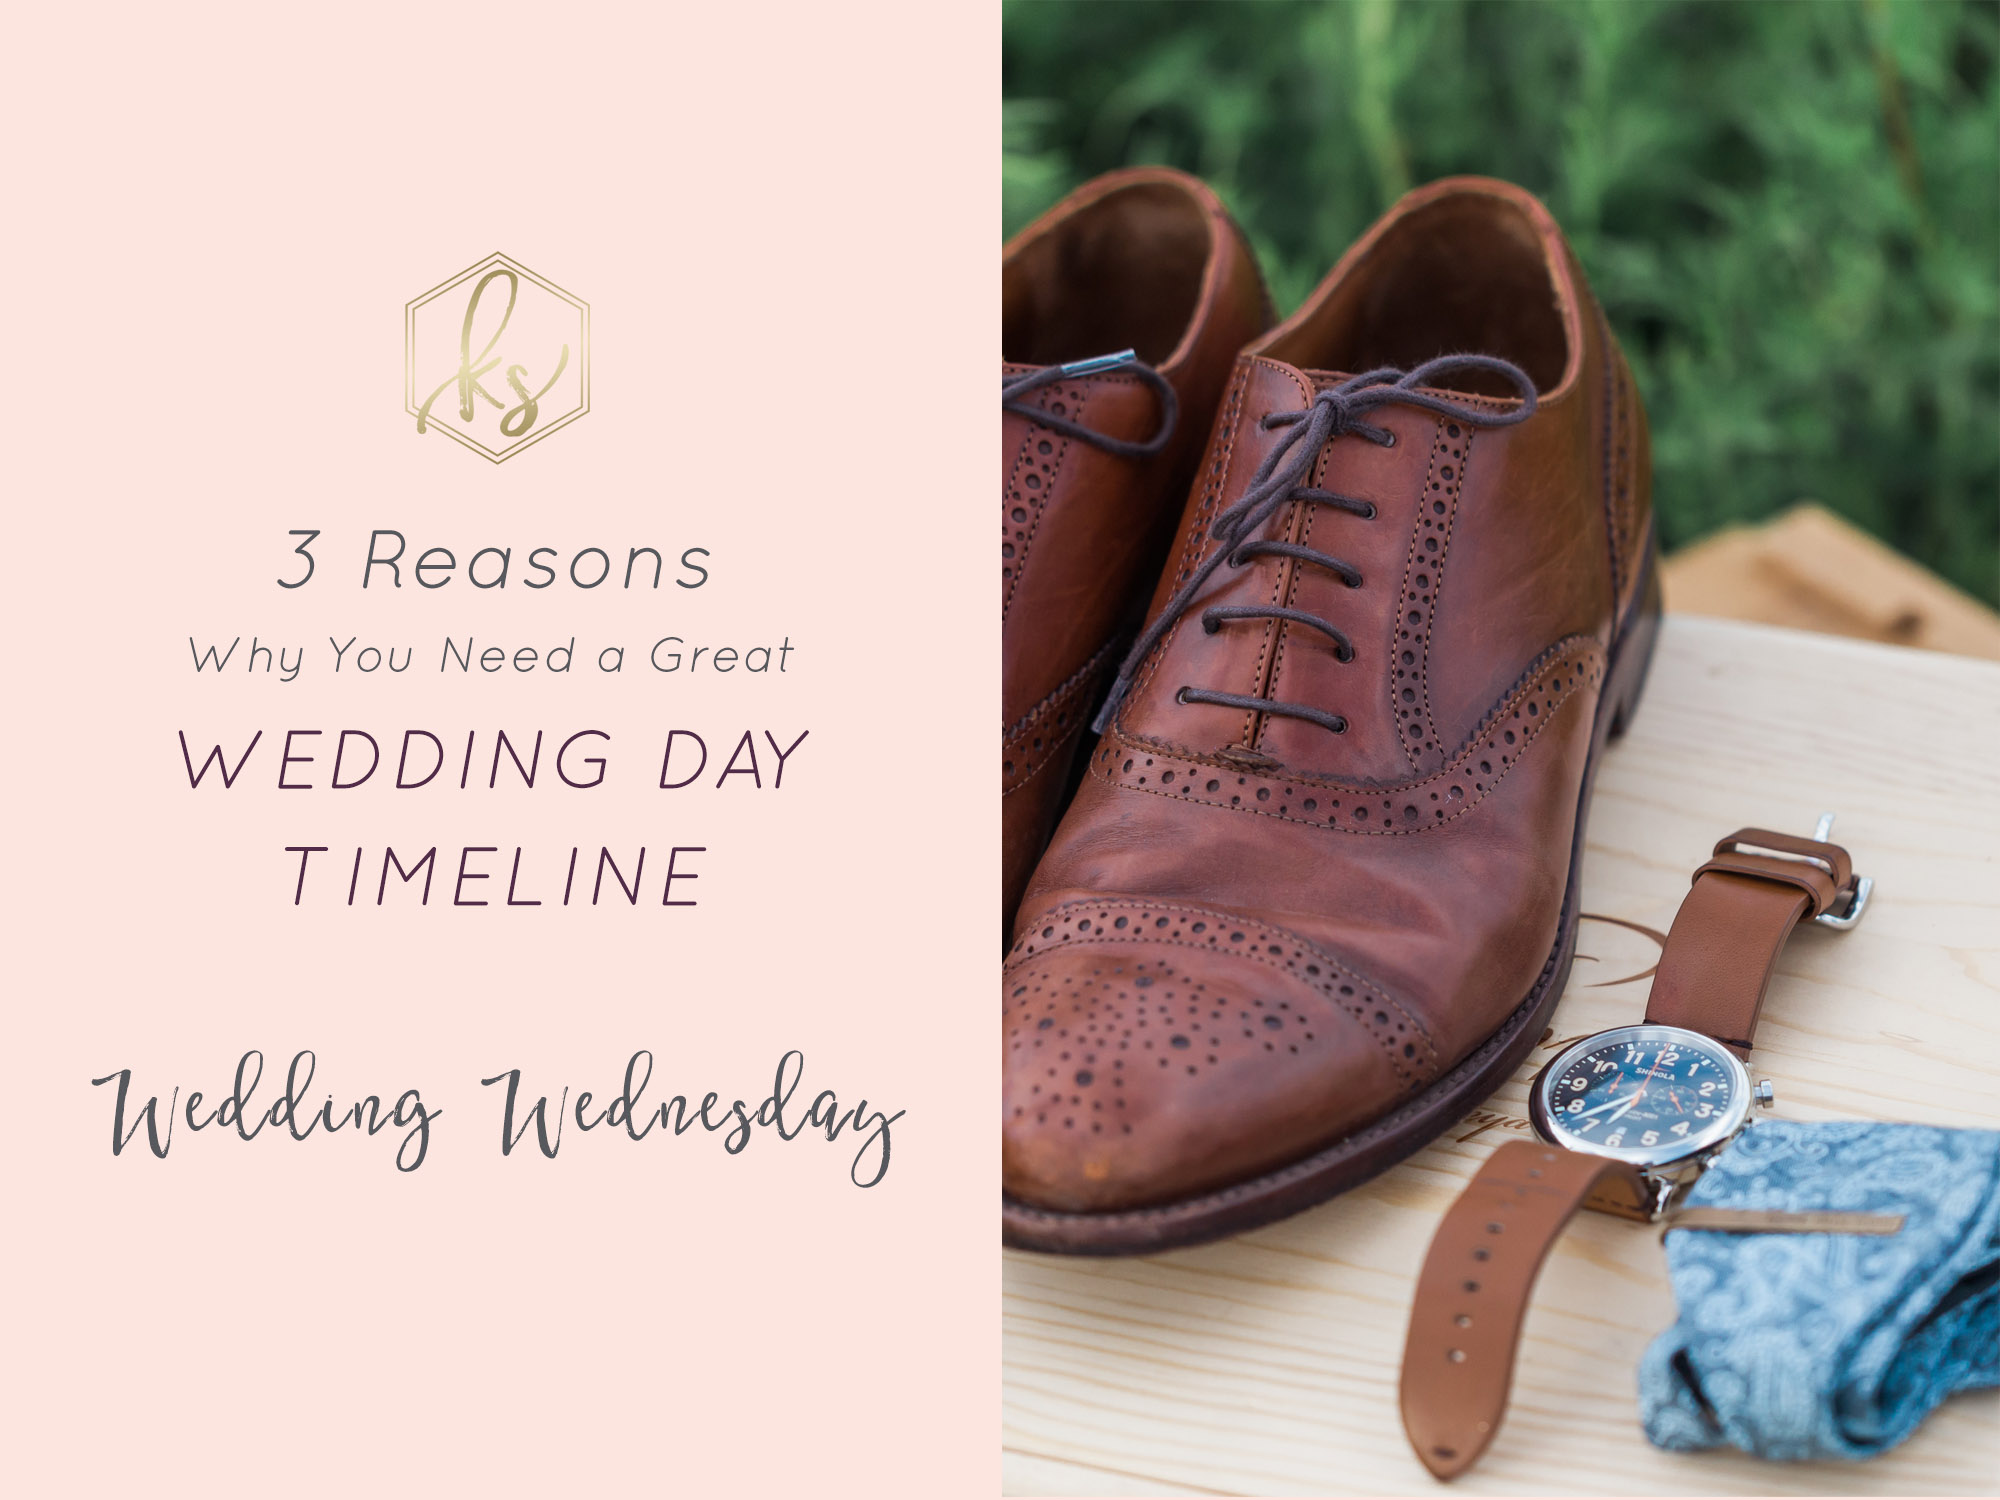 Why you need a wedding day timeline | www.karenshoufler.com